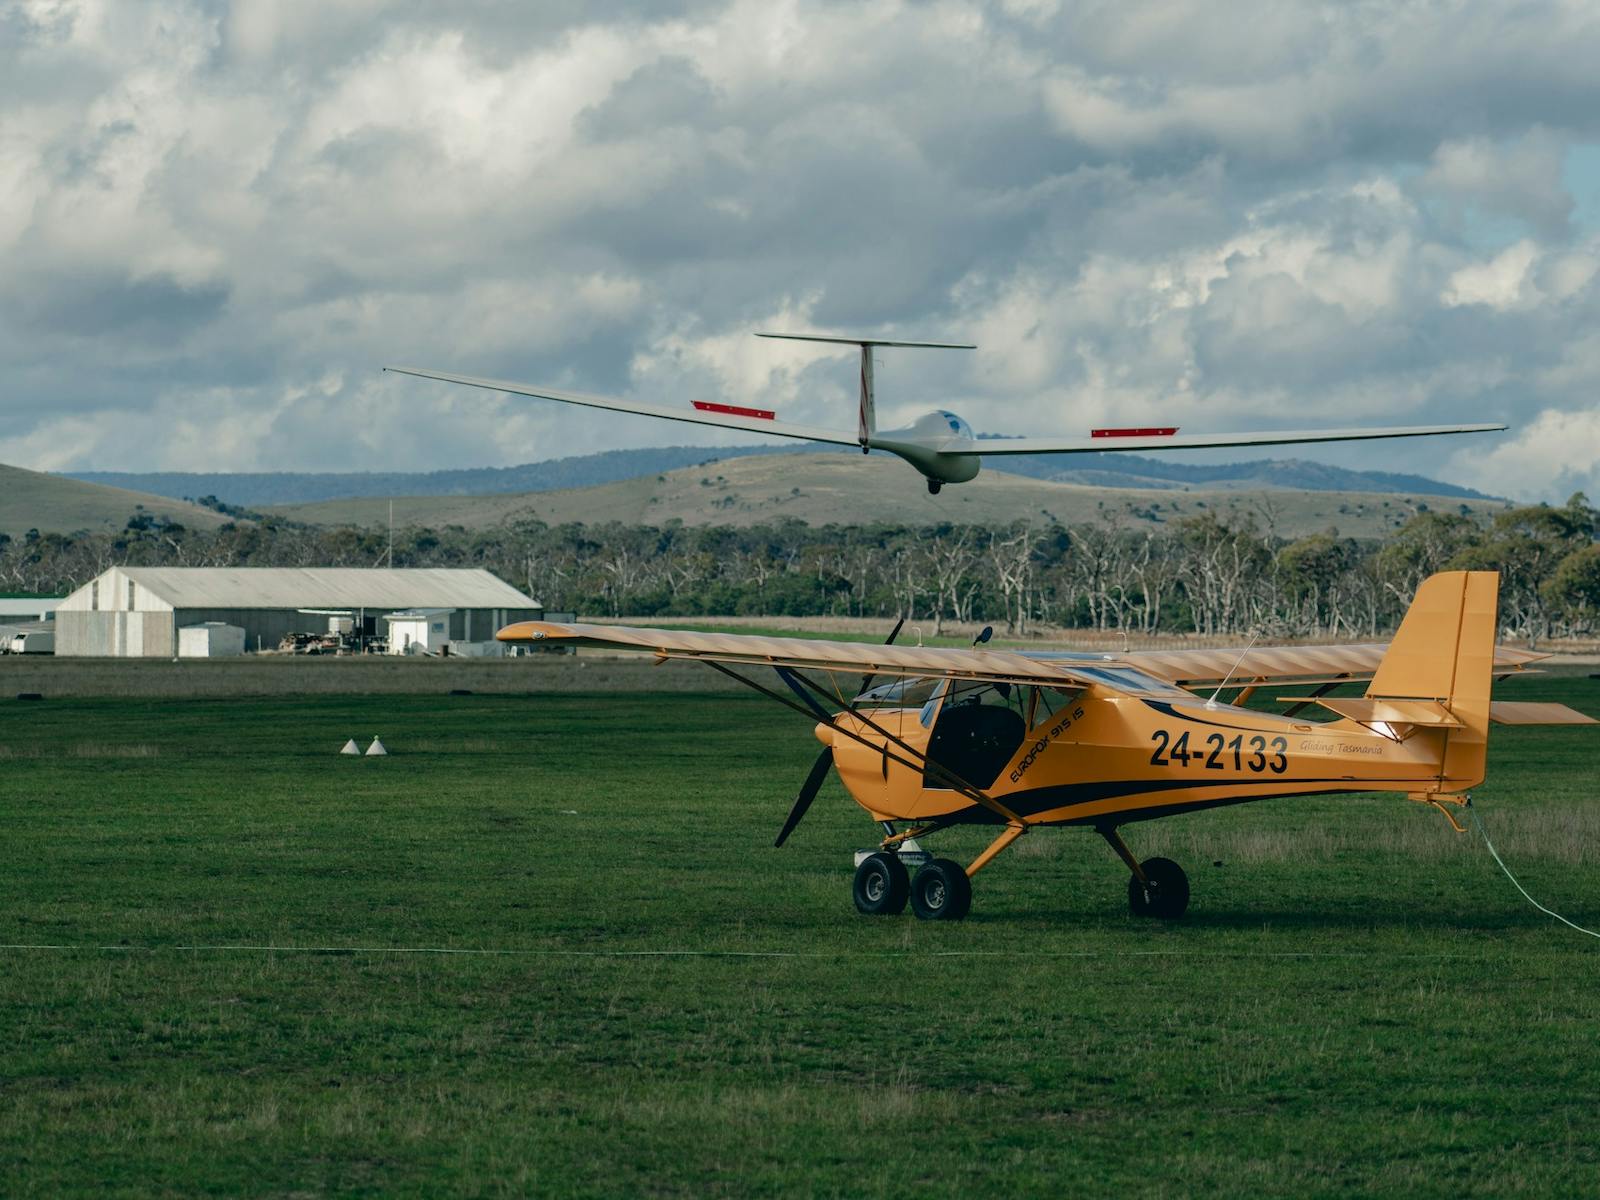 one powered plane, one glider, one hanger